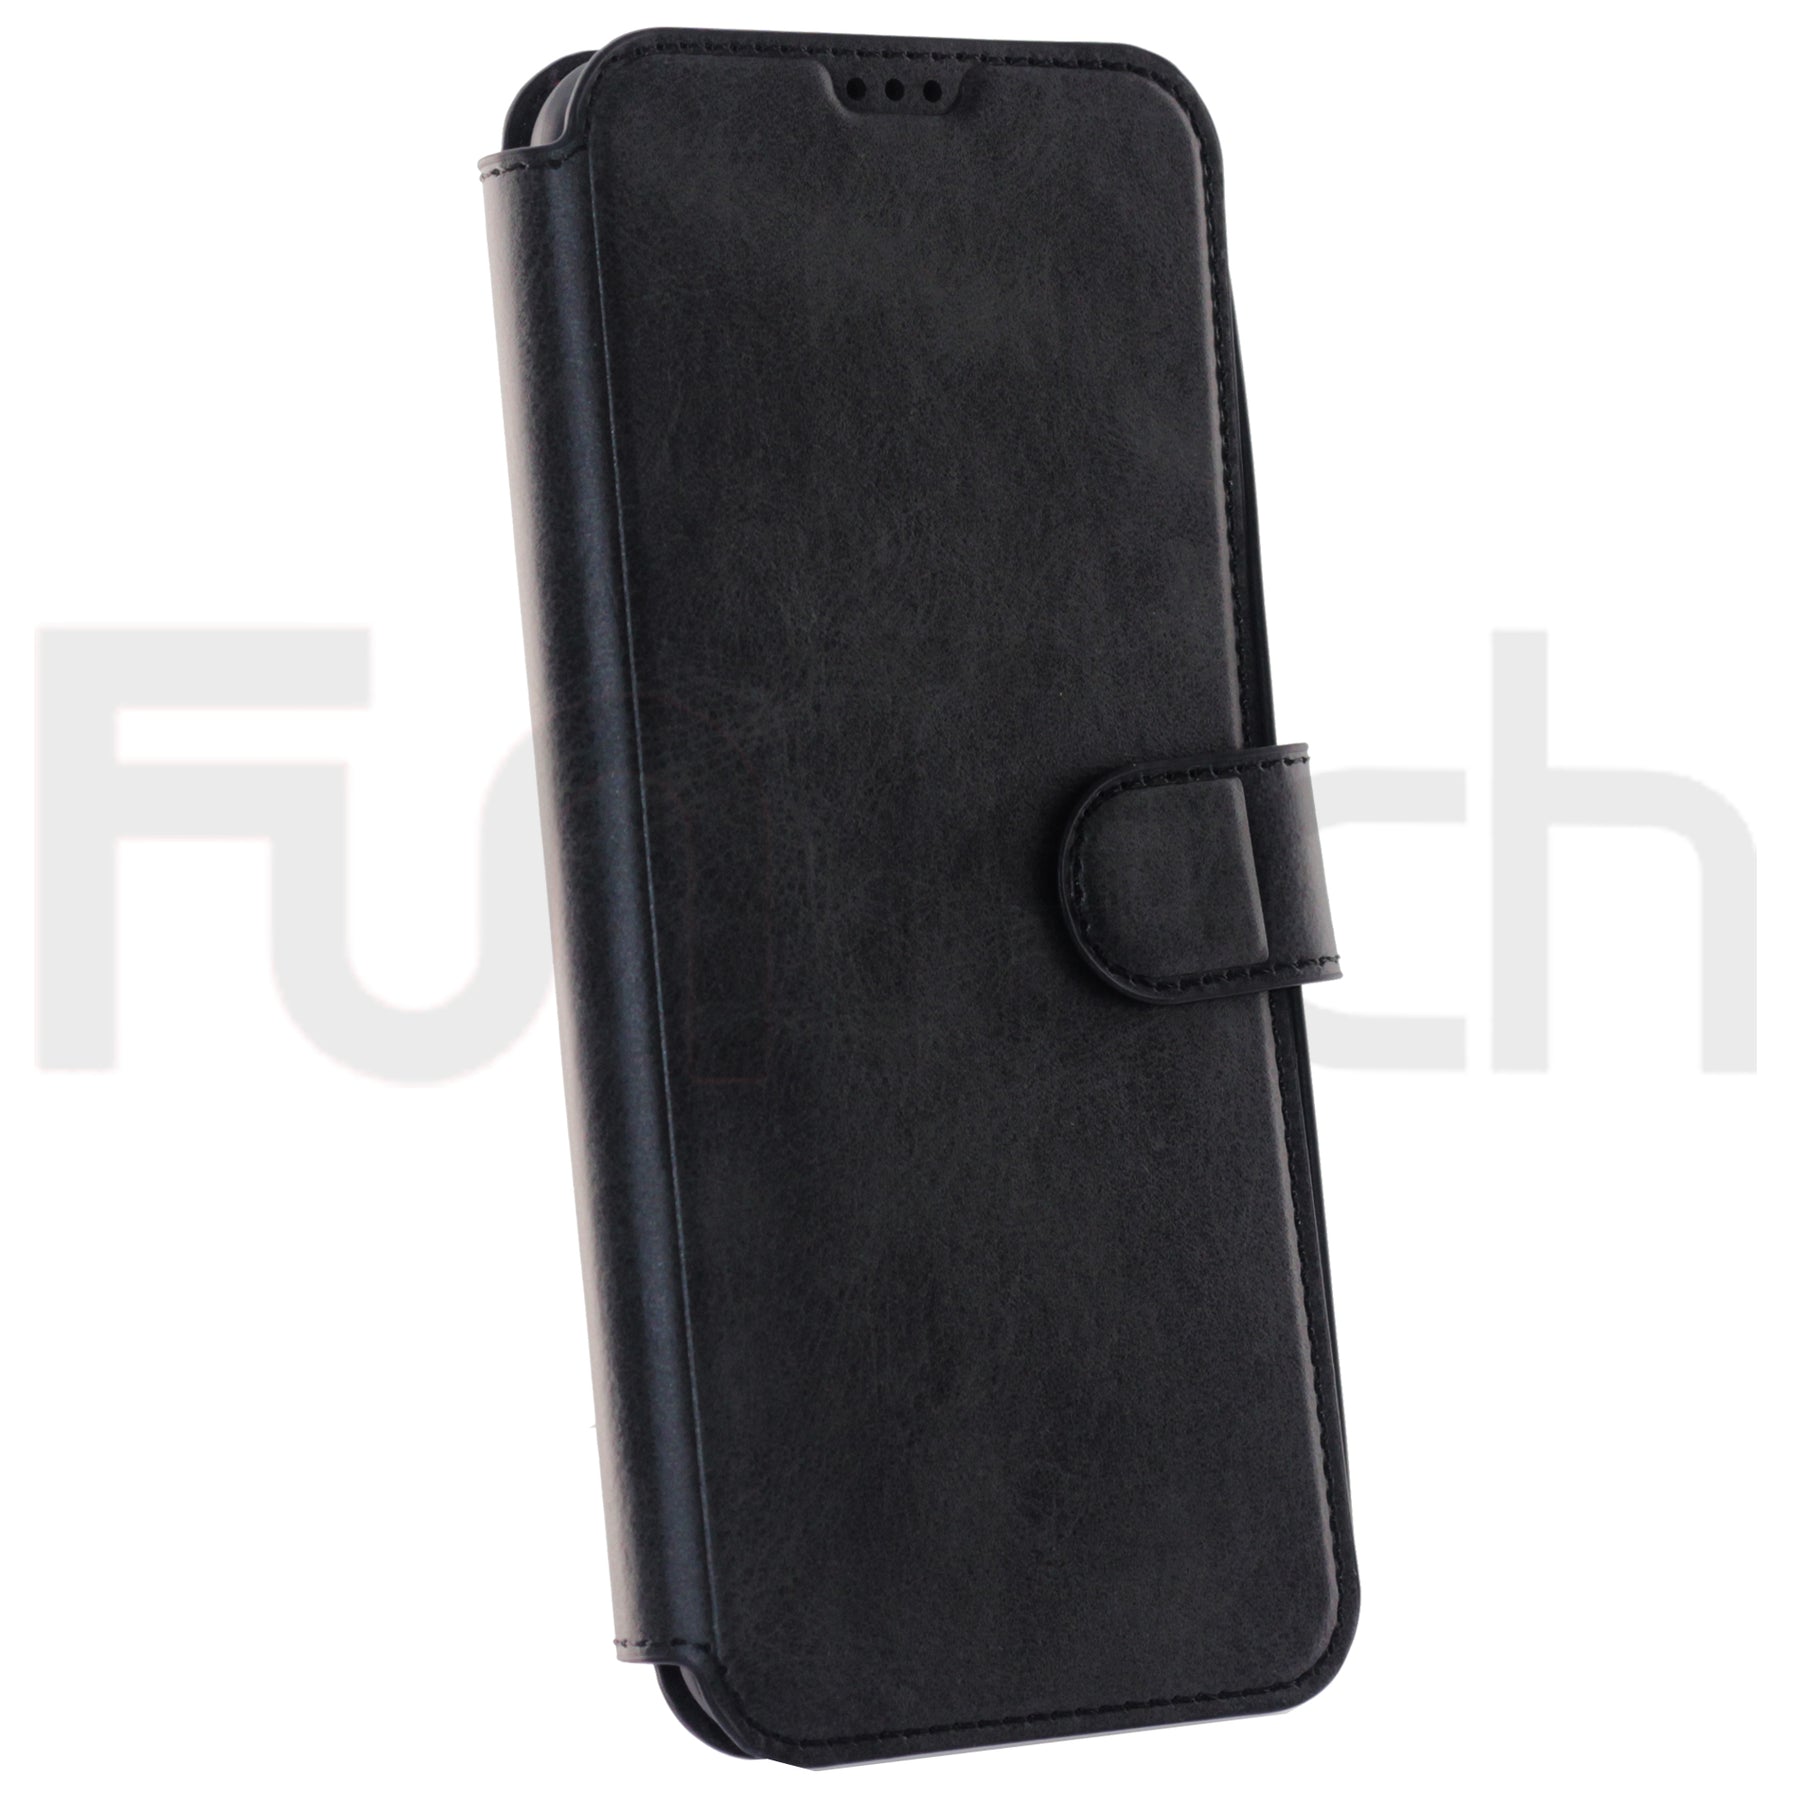 R20, Leather Wallet Case, Color Black.